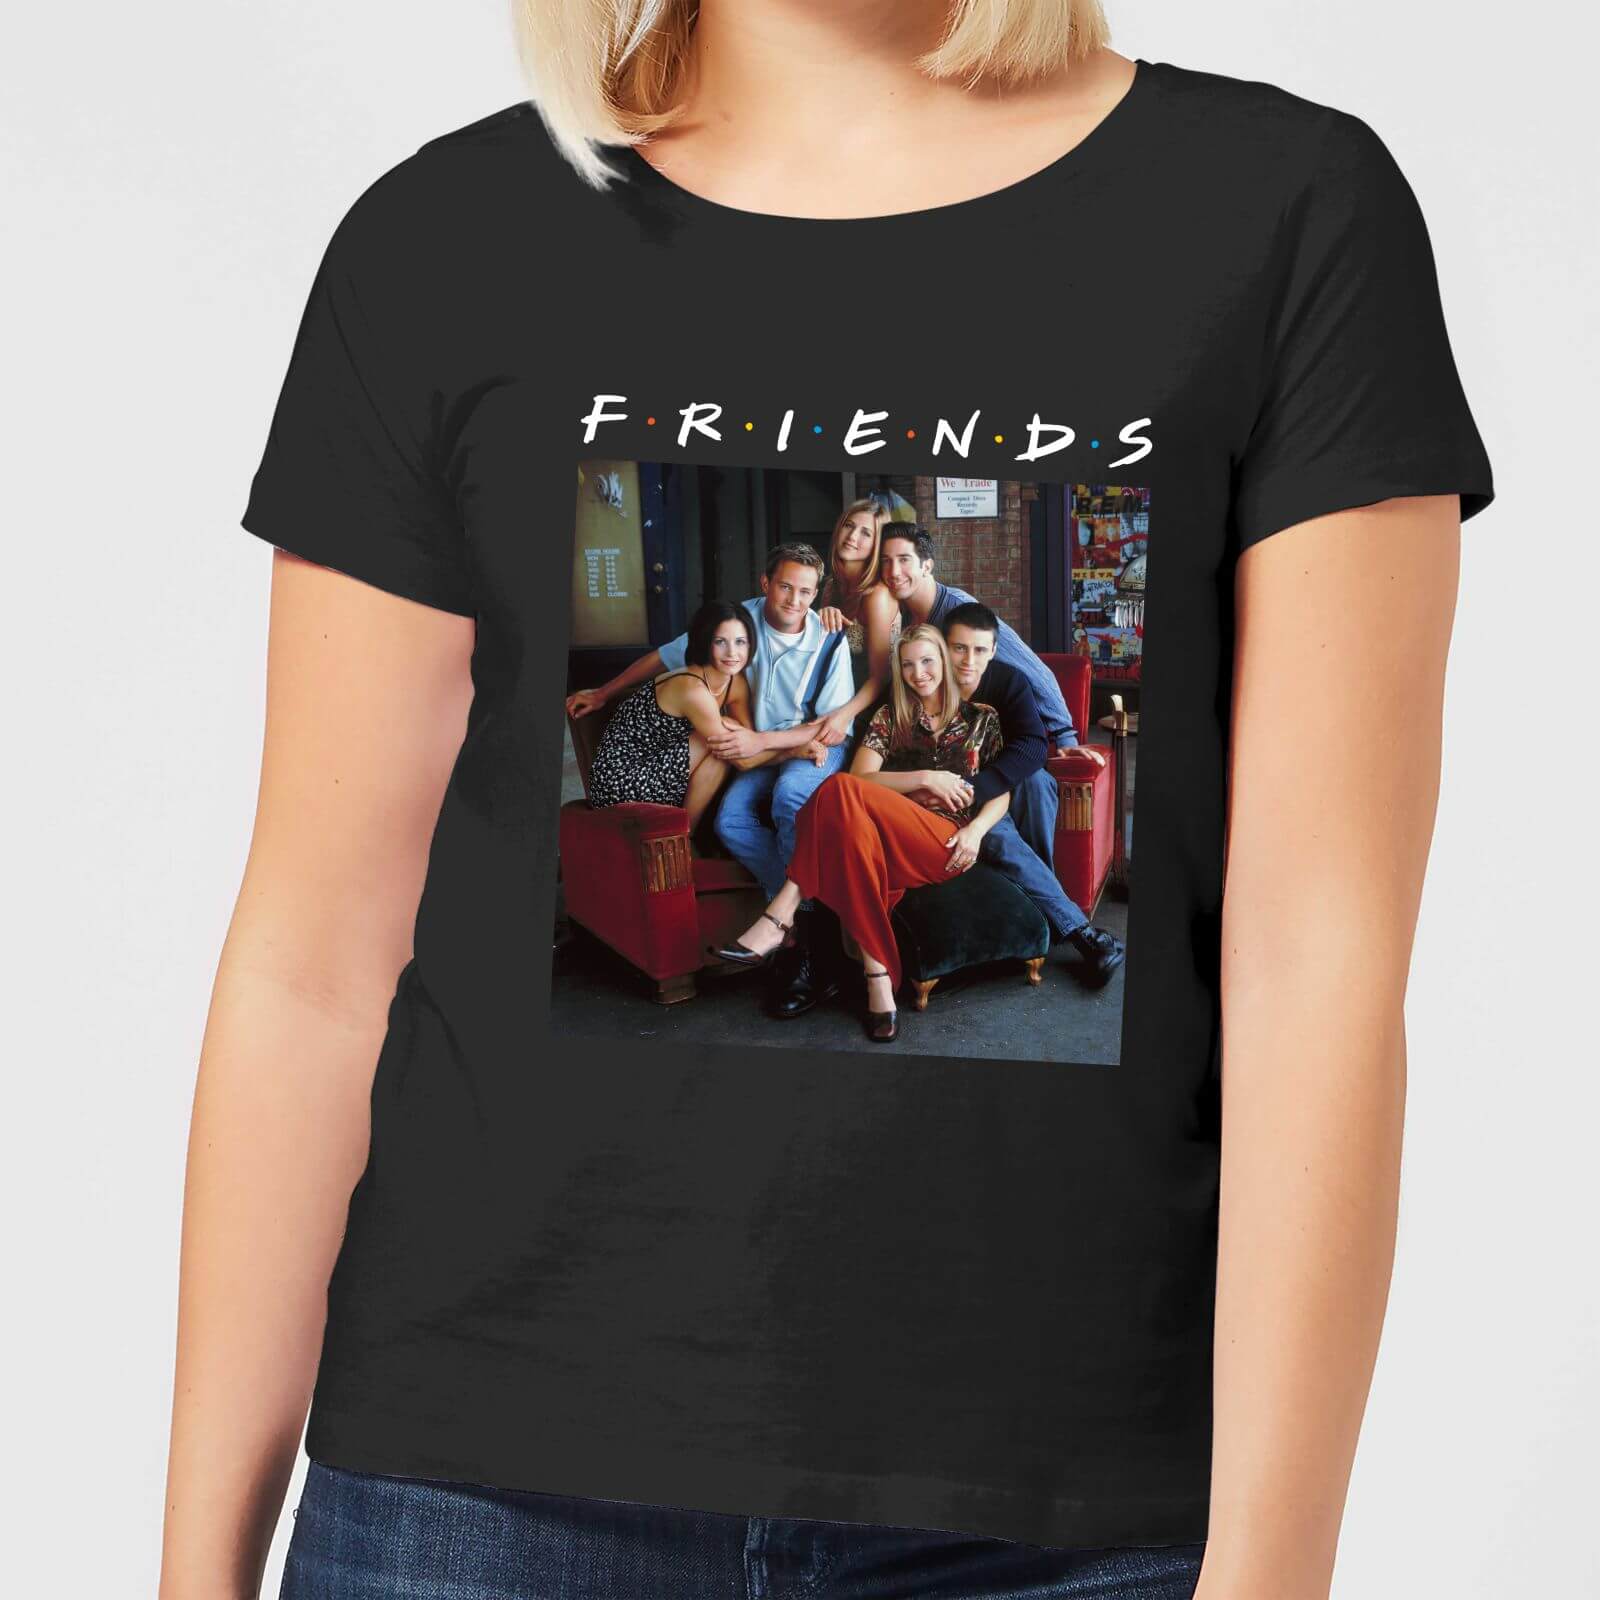 Friends classic character women's t-shirt - black - xl